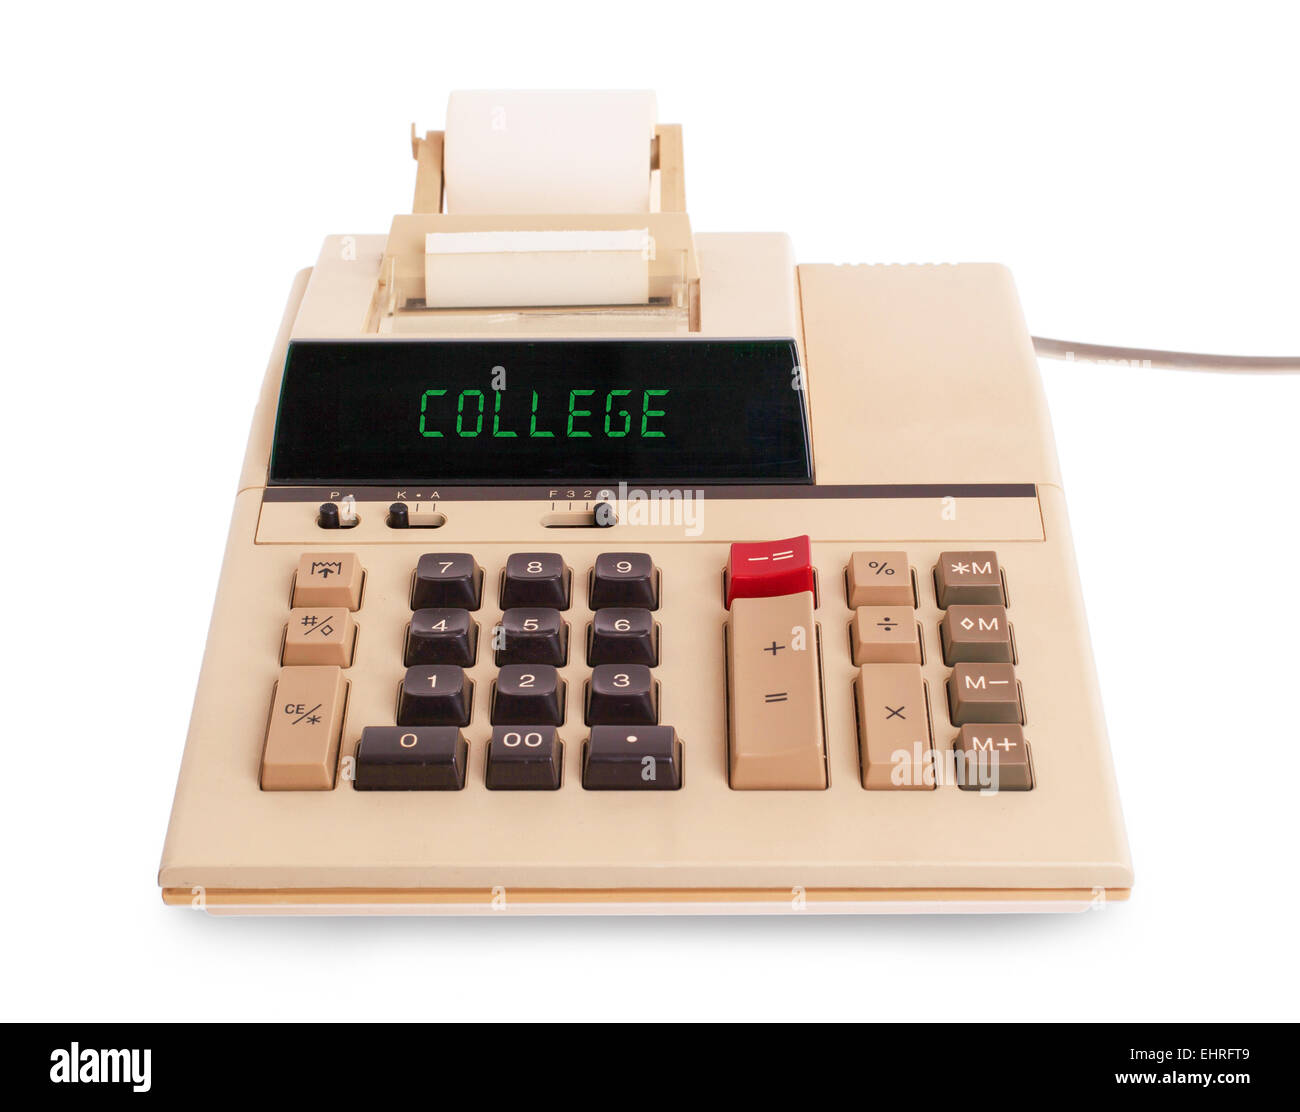 Calculadora antigua mostrando un texto en pantalla - colegio Foto de stock